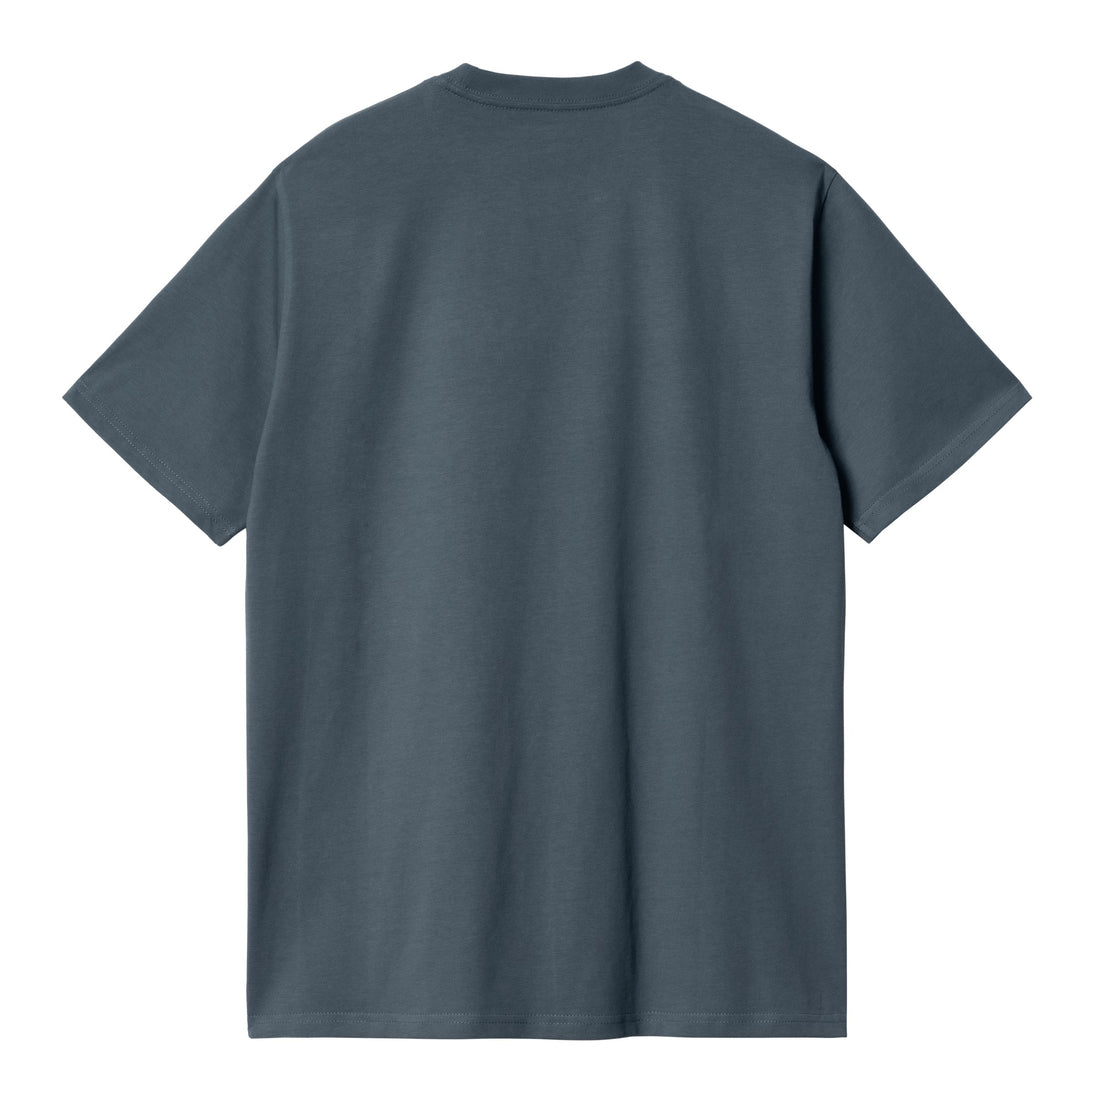 Carhartt WIP Pocket T-Shirt | Ore